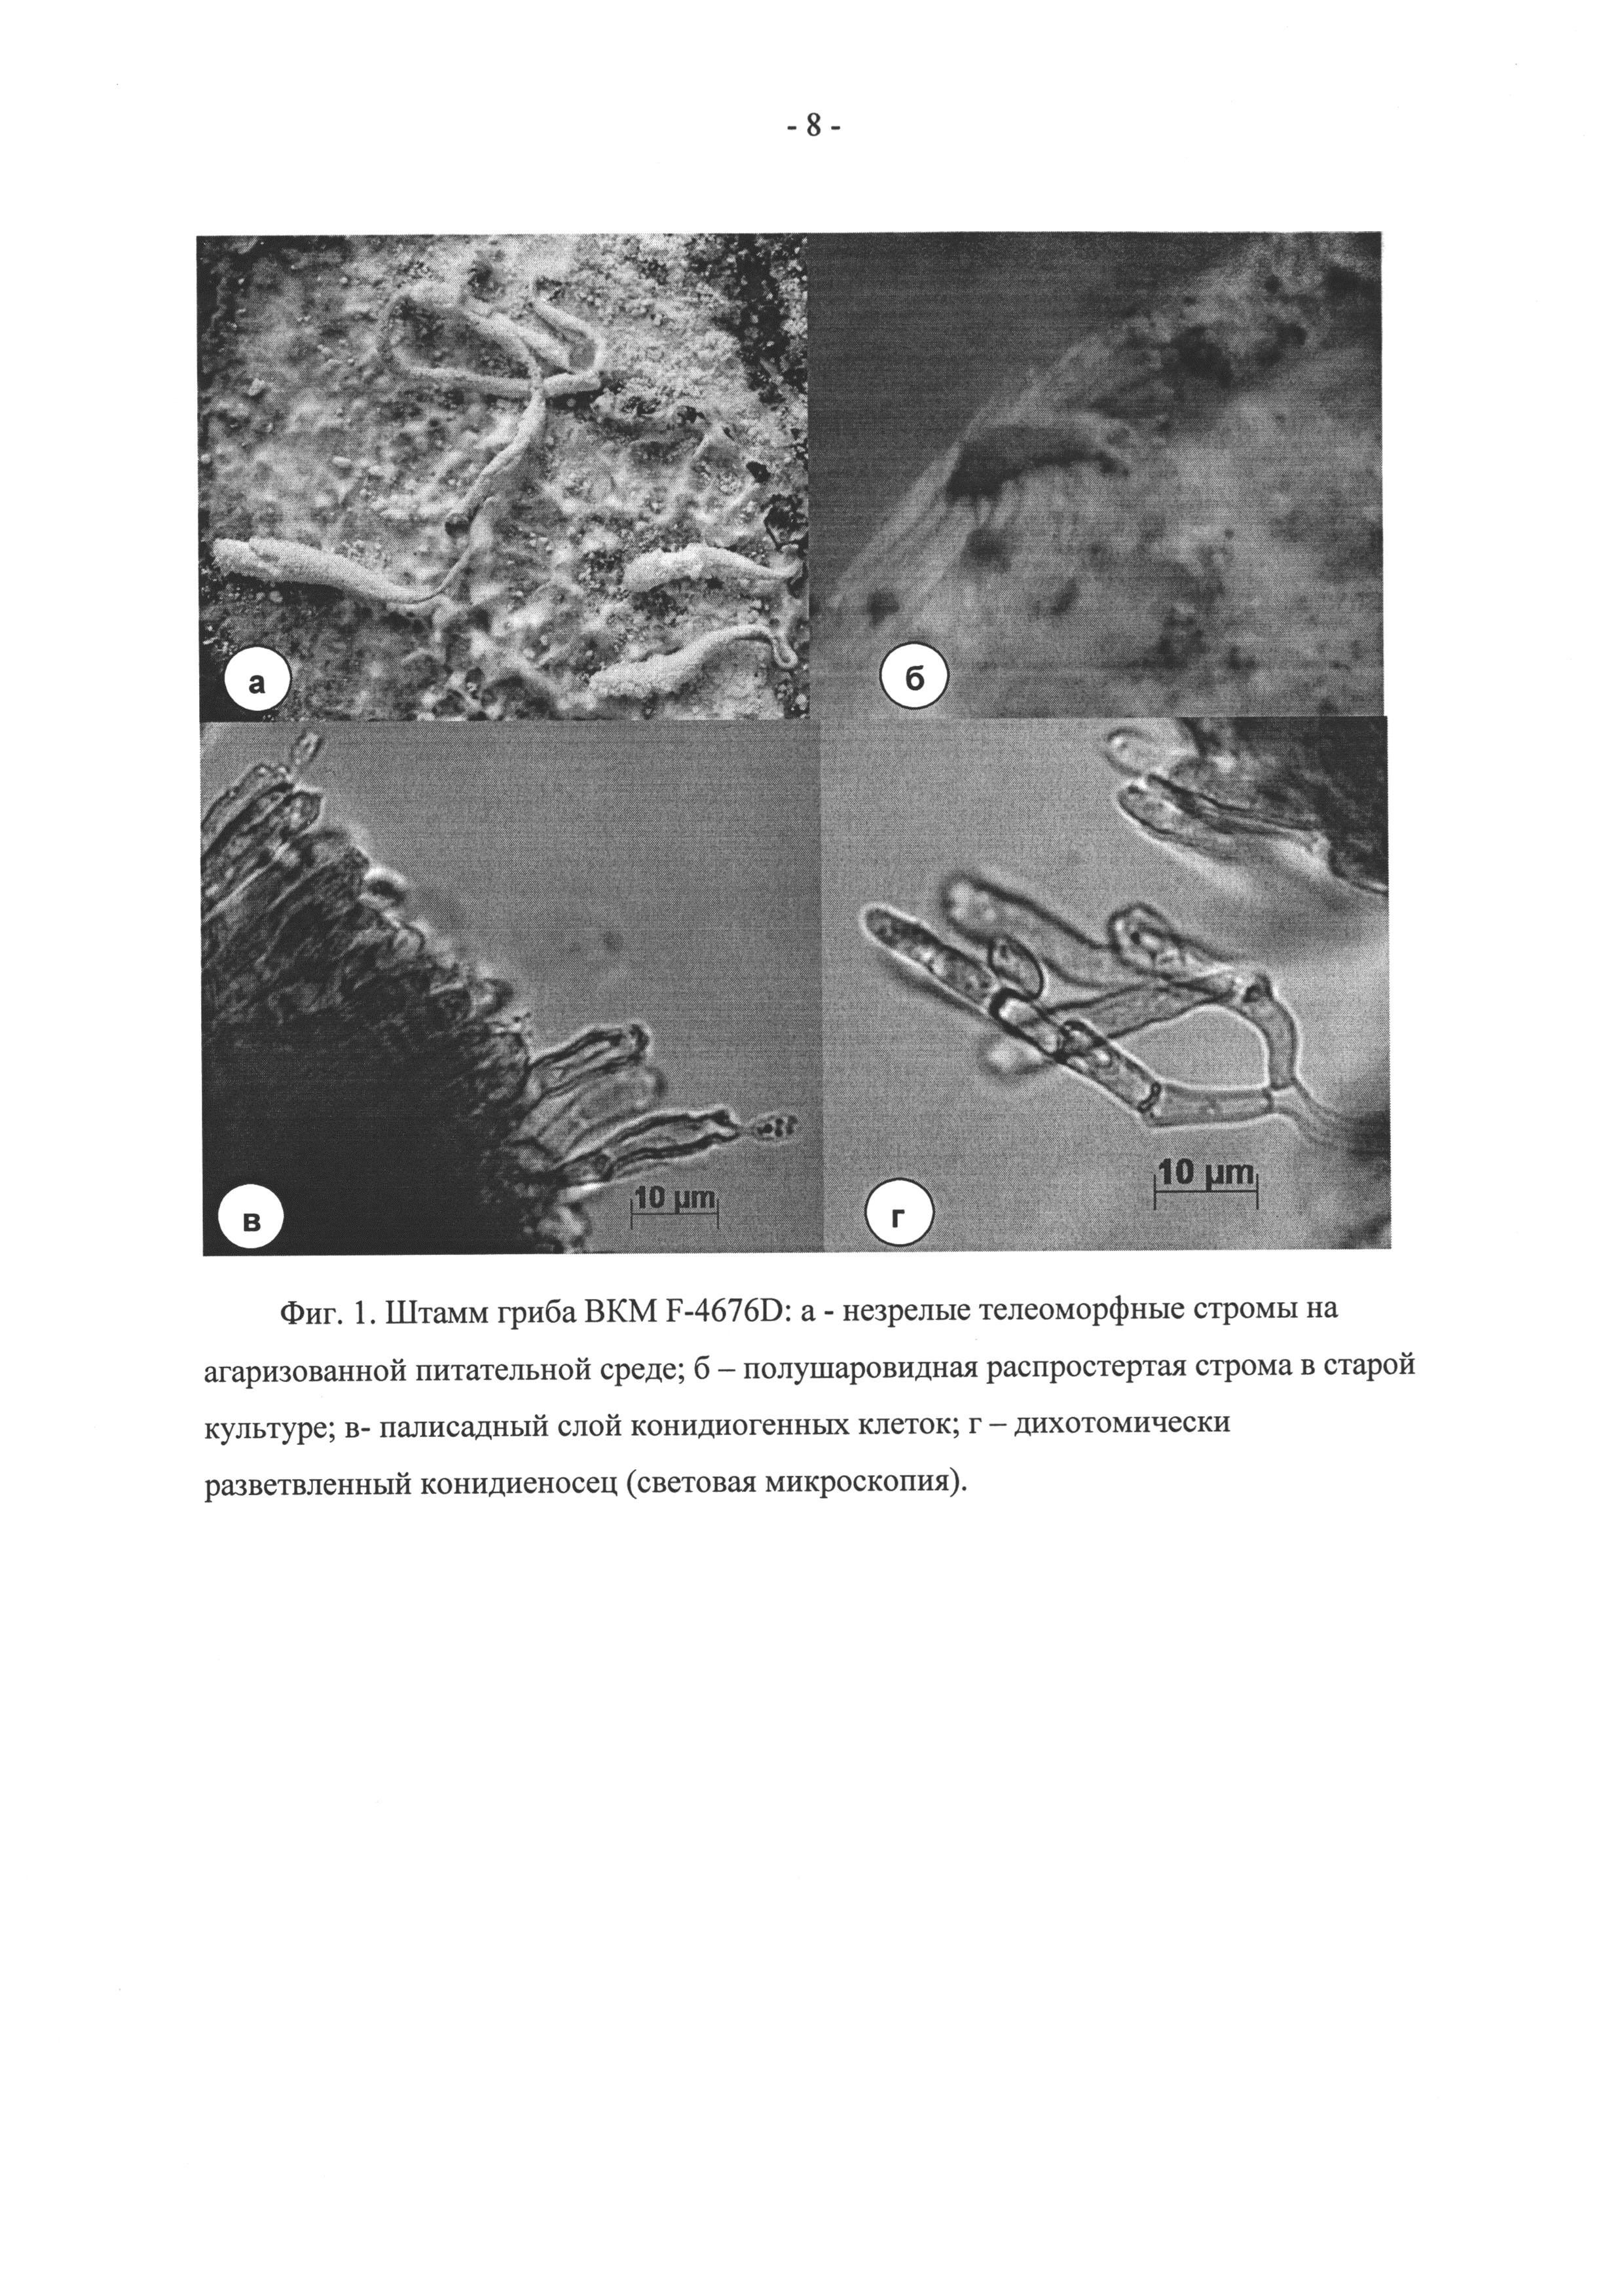 Штамм гриба из класса Sordariomycetes - продуцент антибиотика эремоксиларина А.